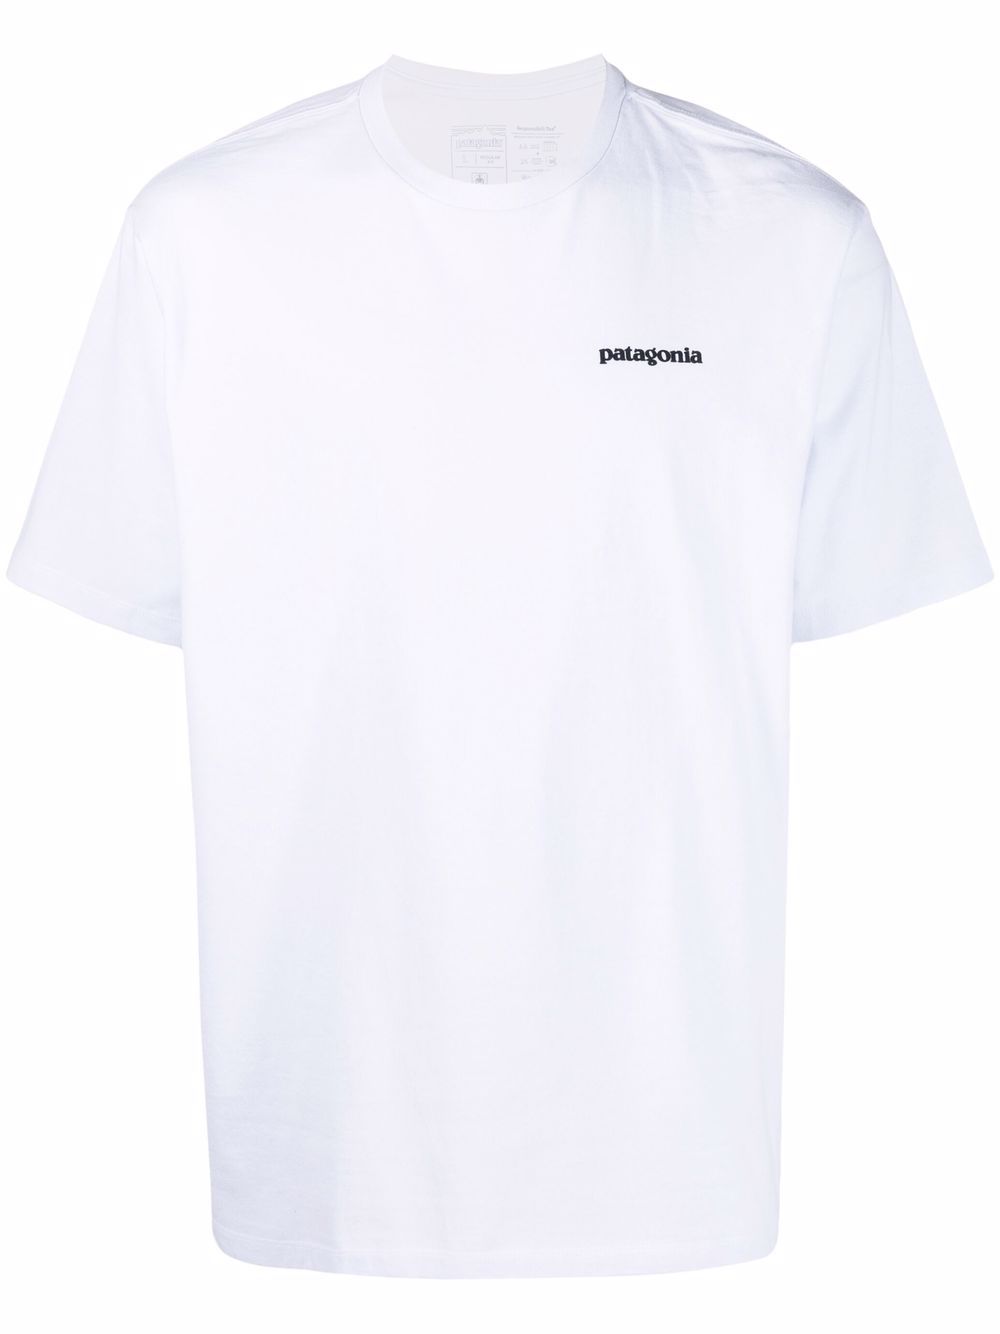 фото Patagonia футболка p-6 с логотипом